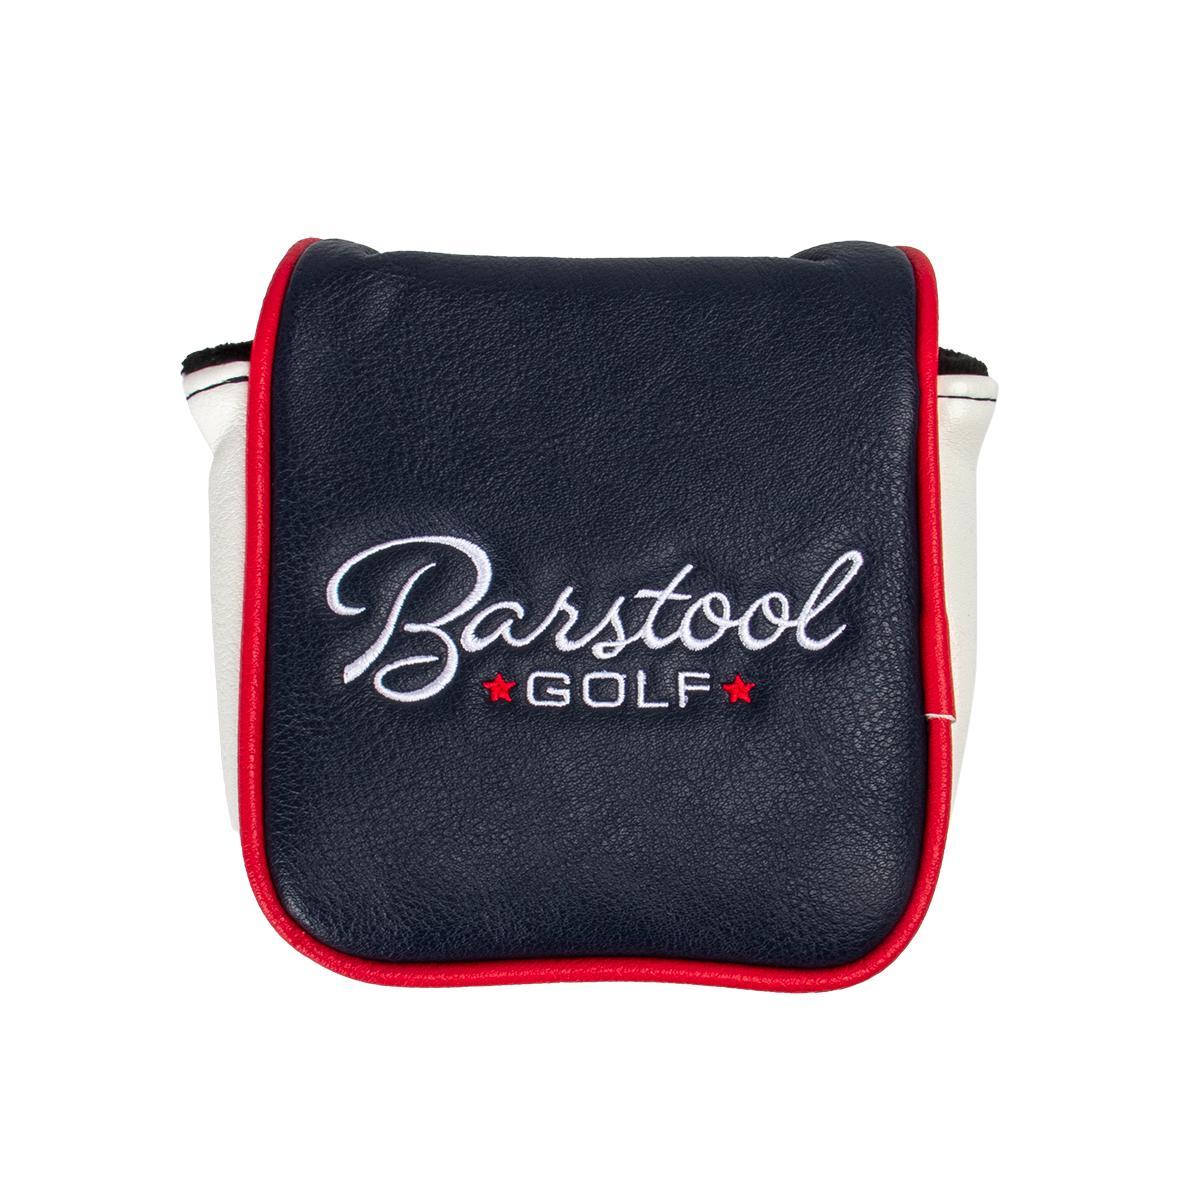 Barstool Golf Mallet Putter Cover